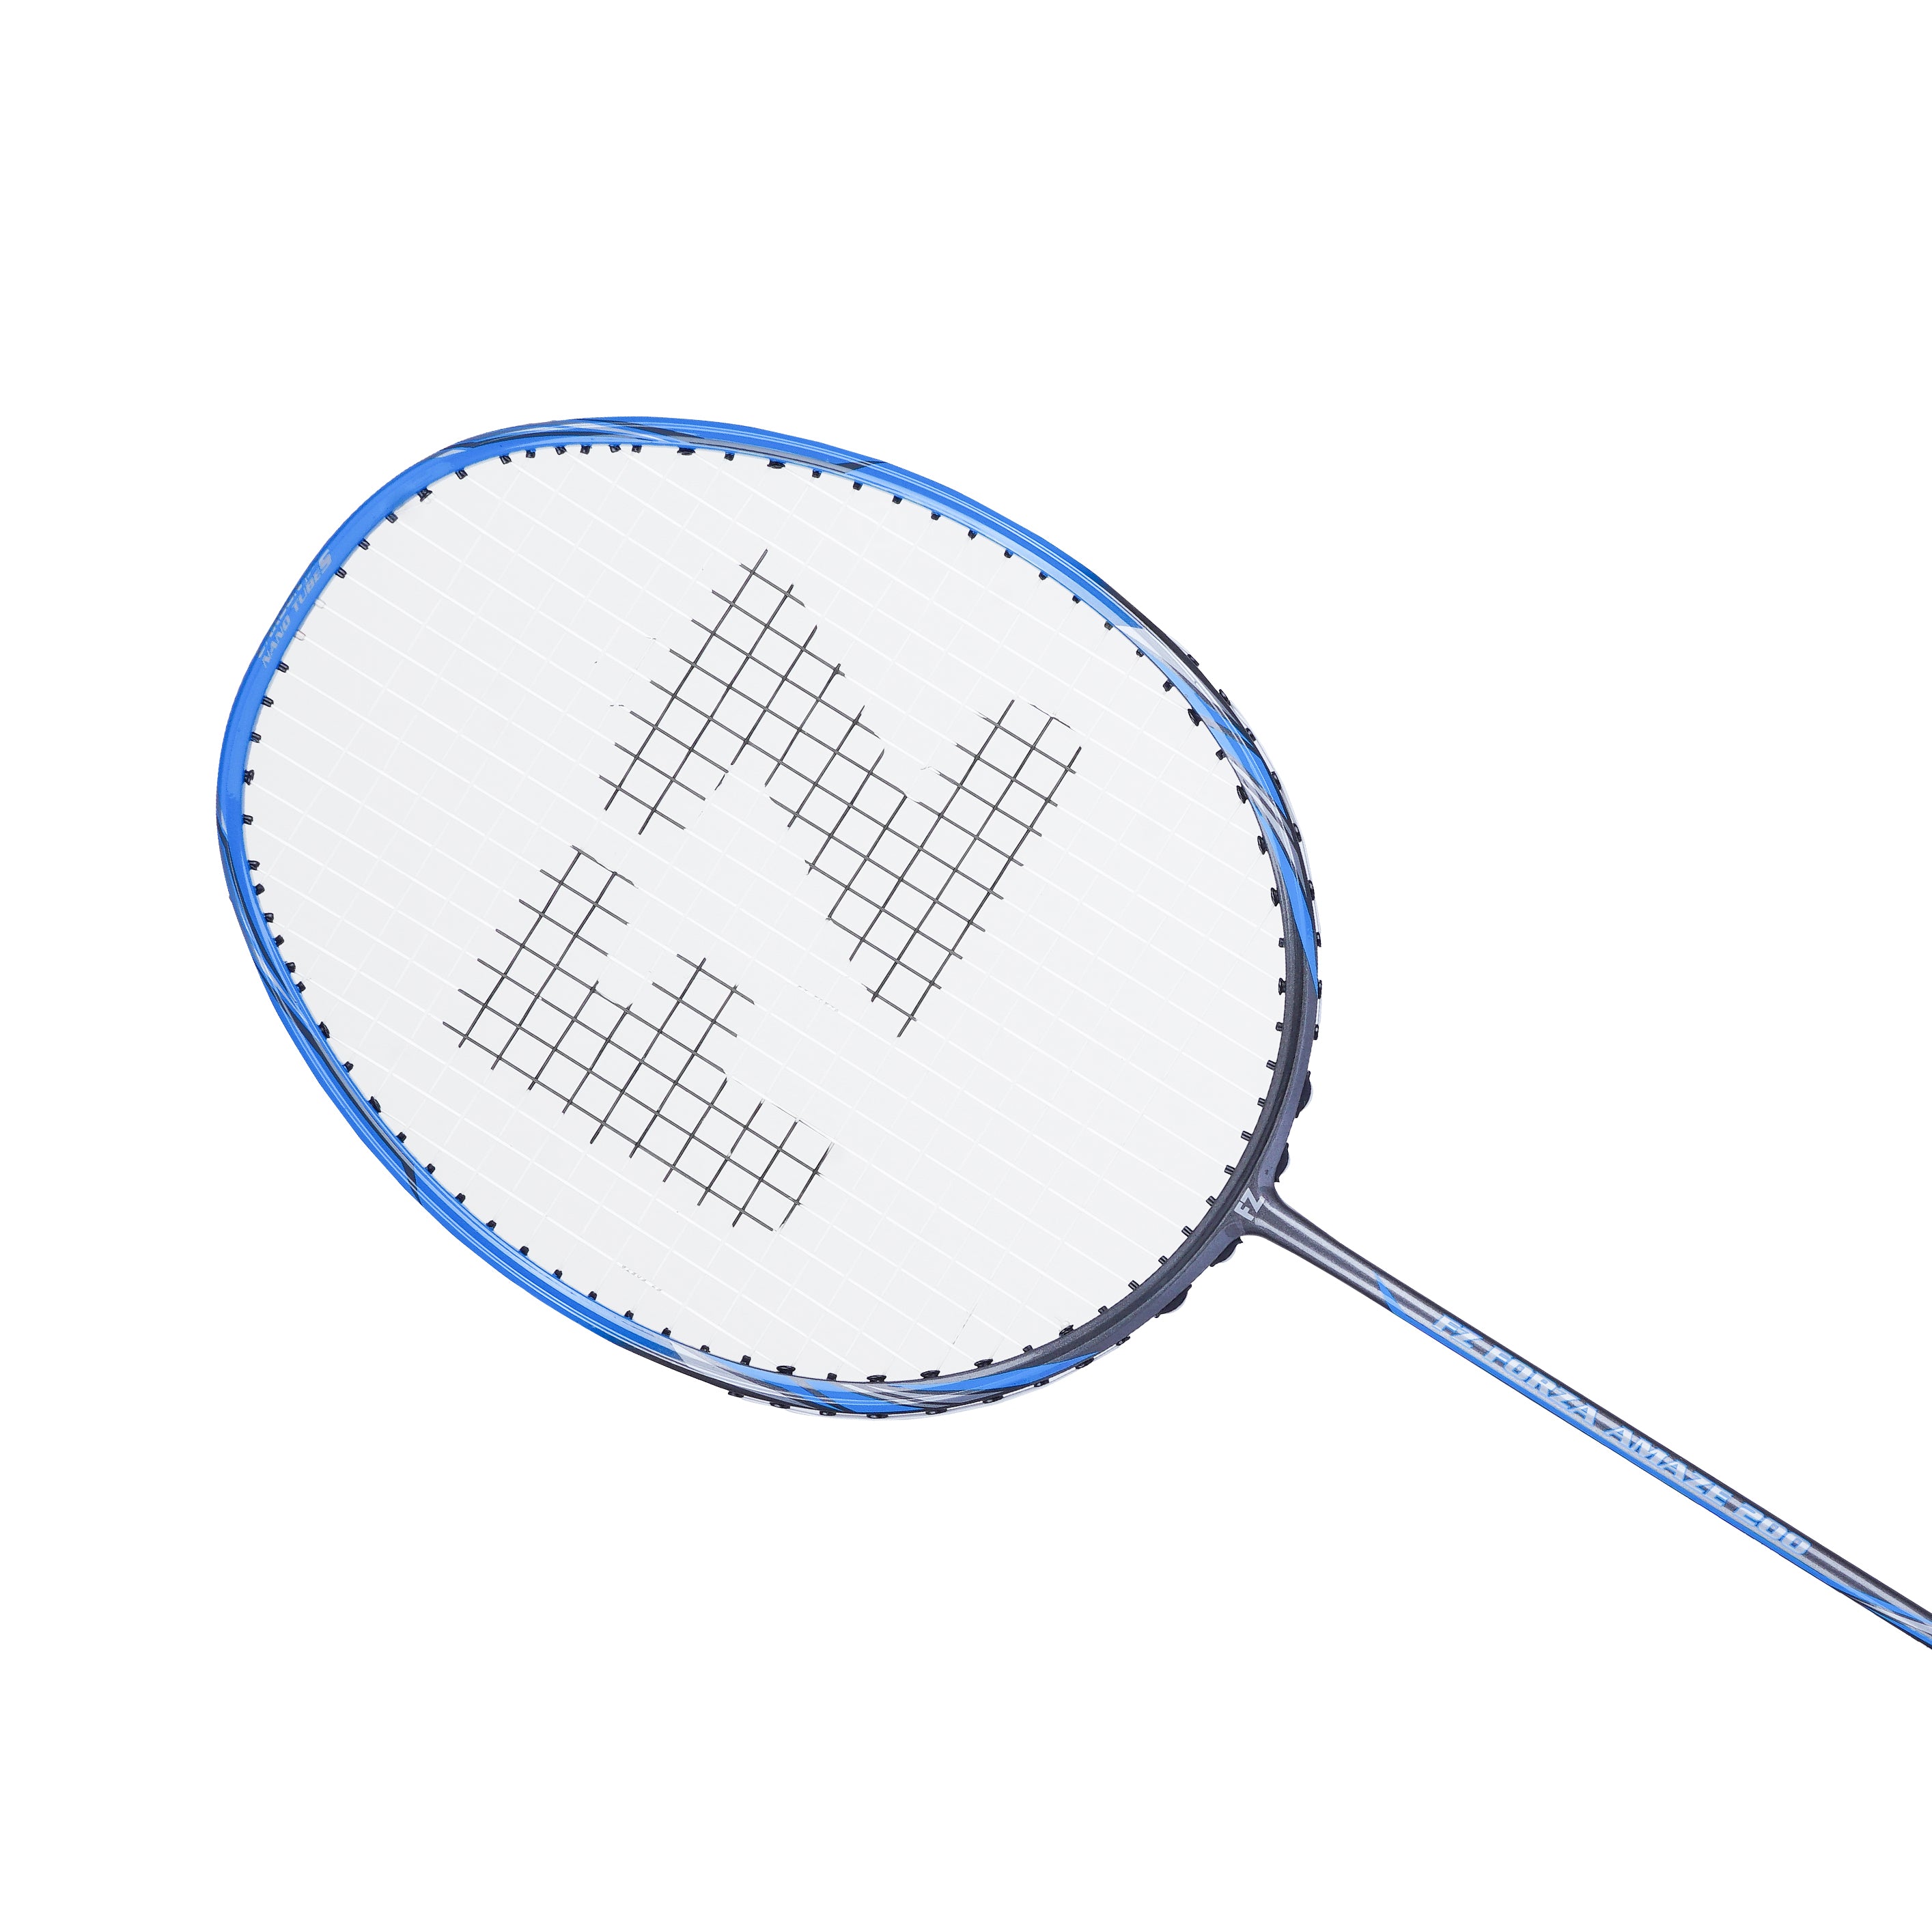 Amaze 200 Strung Badminton Racket (Blue Aster)